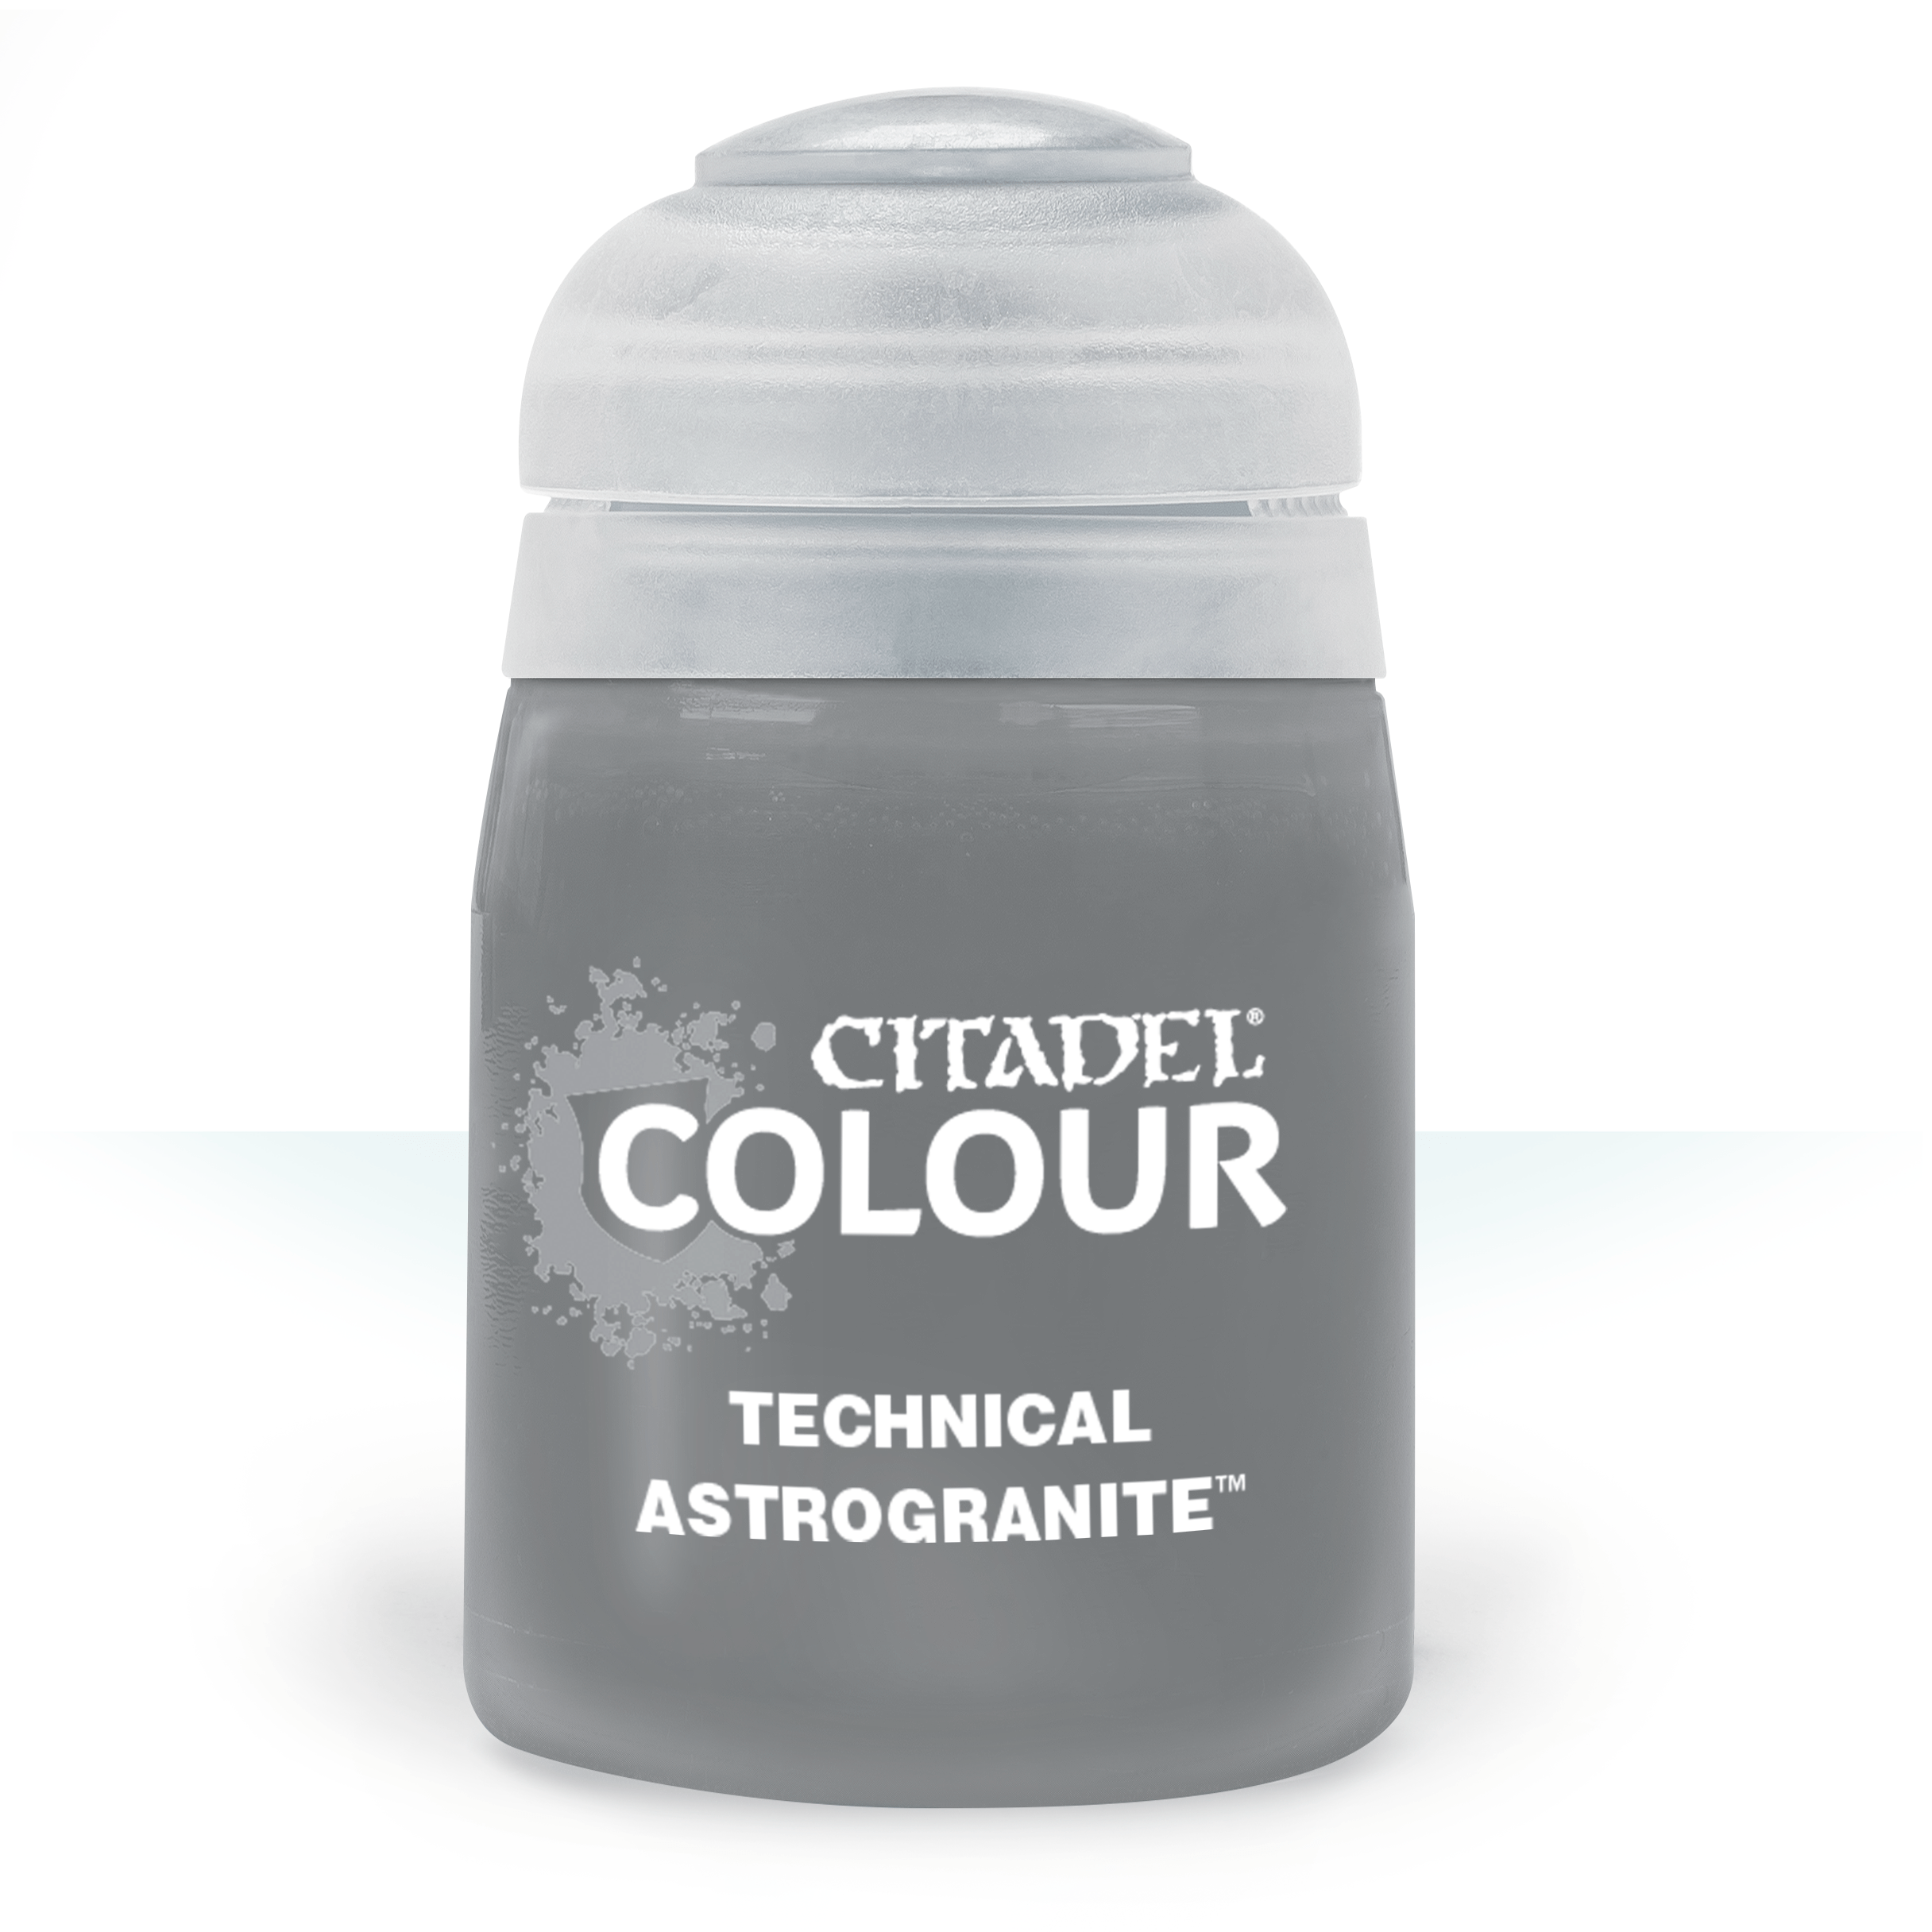 Citadel Technical Astrogranite